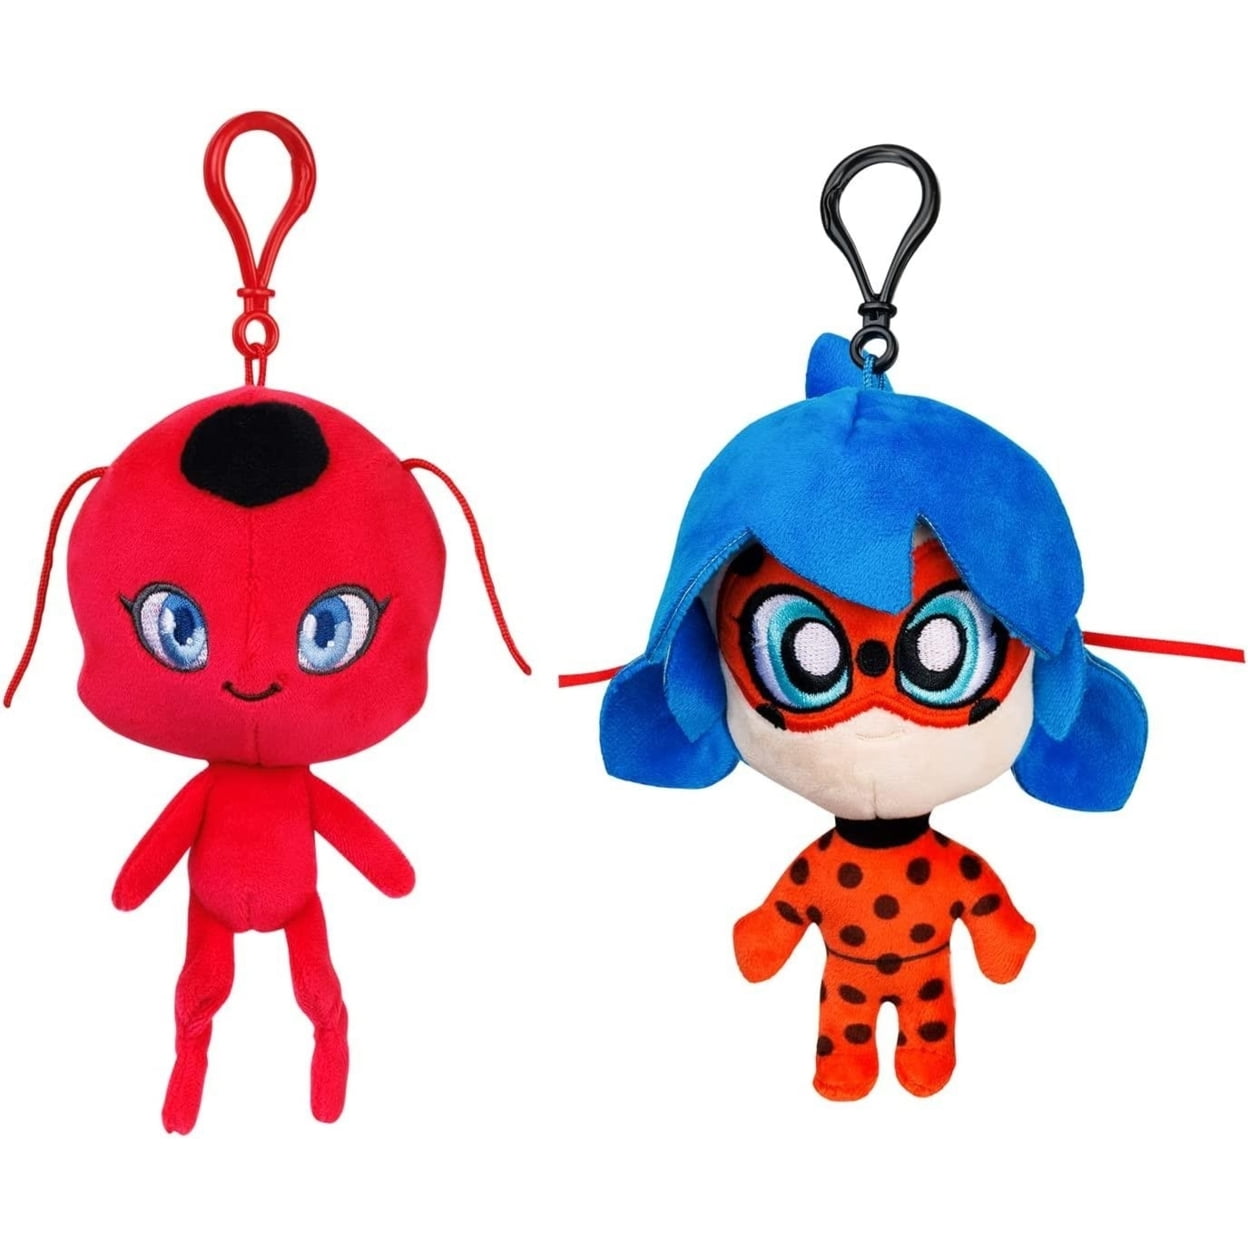 New Miraculous Ladybug Season 2 Toy - Zoomin' Ladybug Scooter and Tikki 